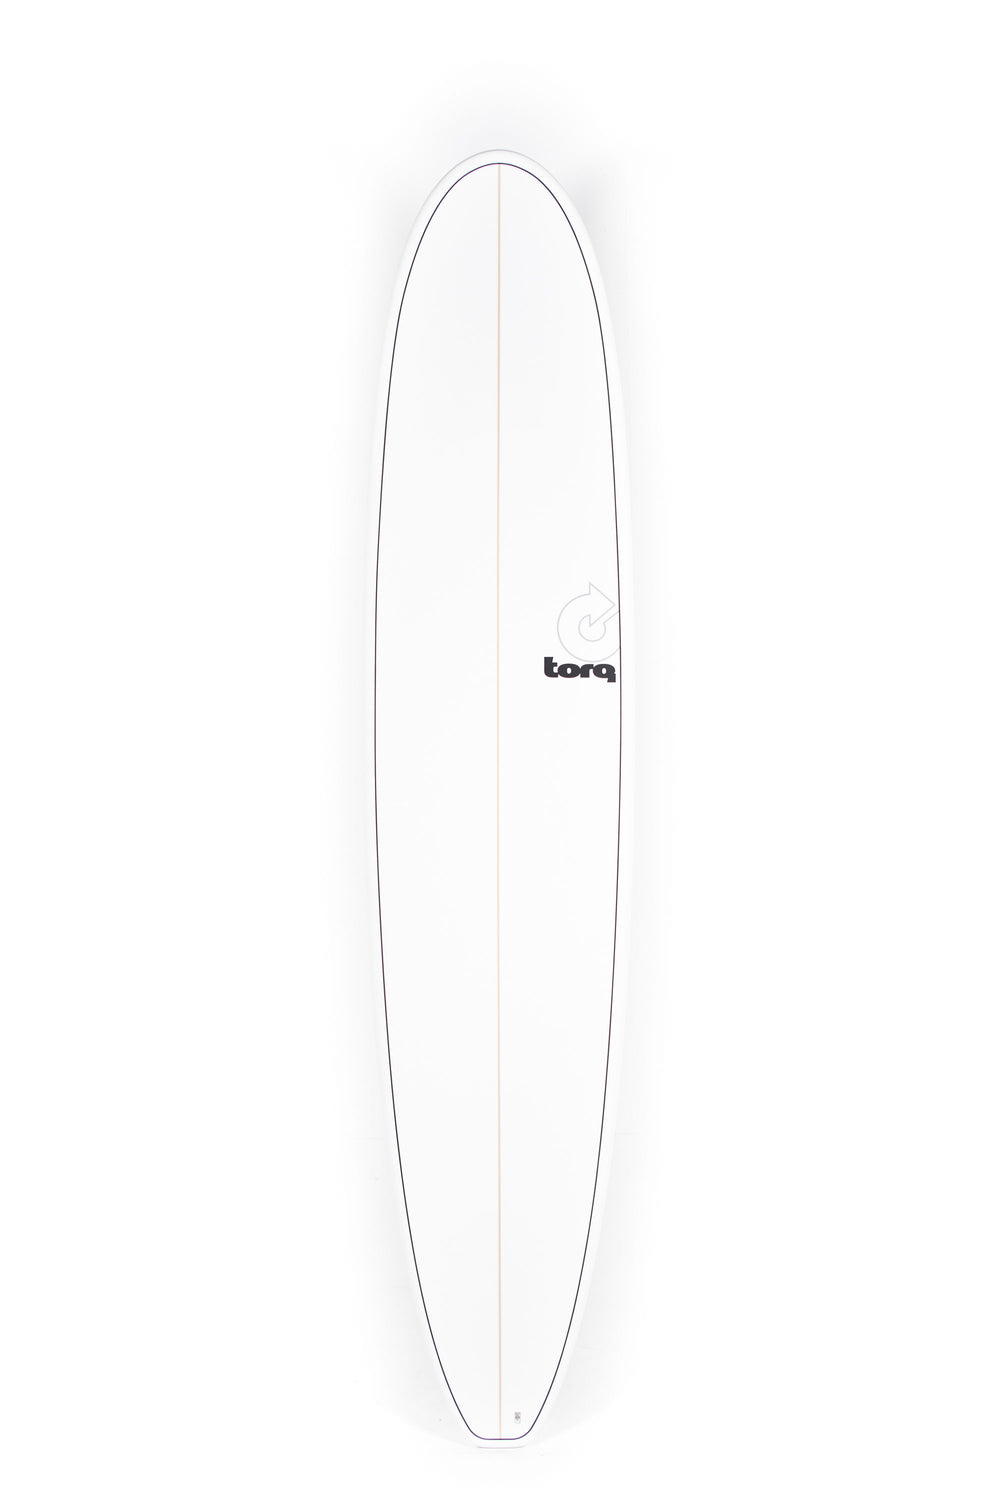 Pukas-Surf-Shop-Torq-Surfboards-Long-9_0